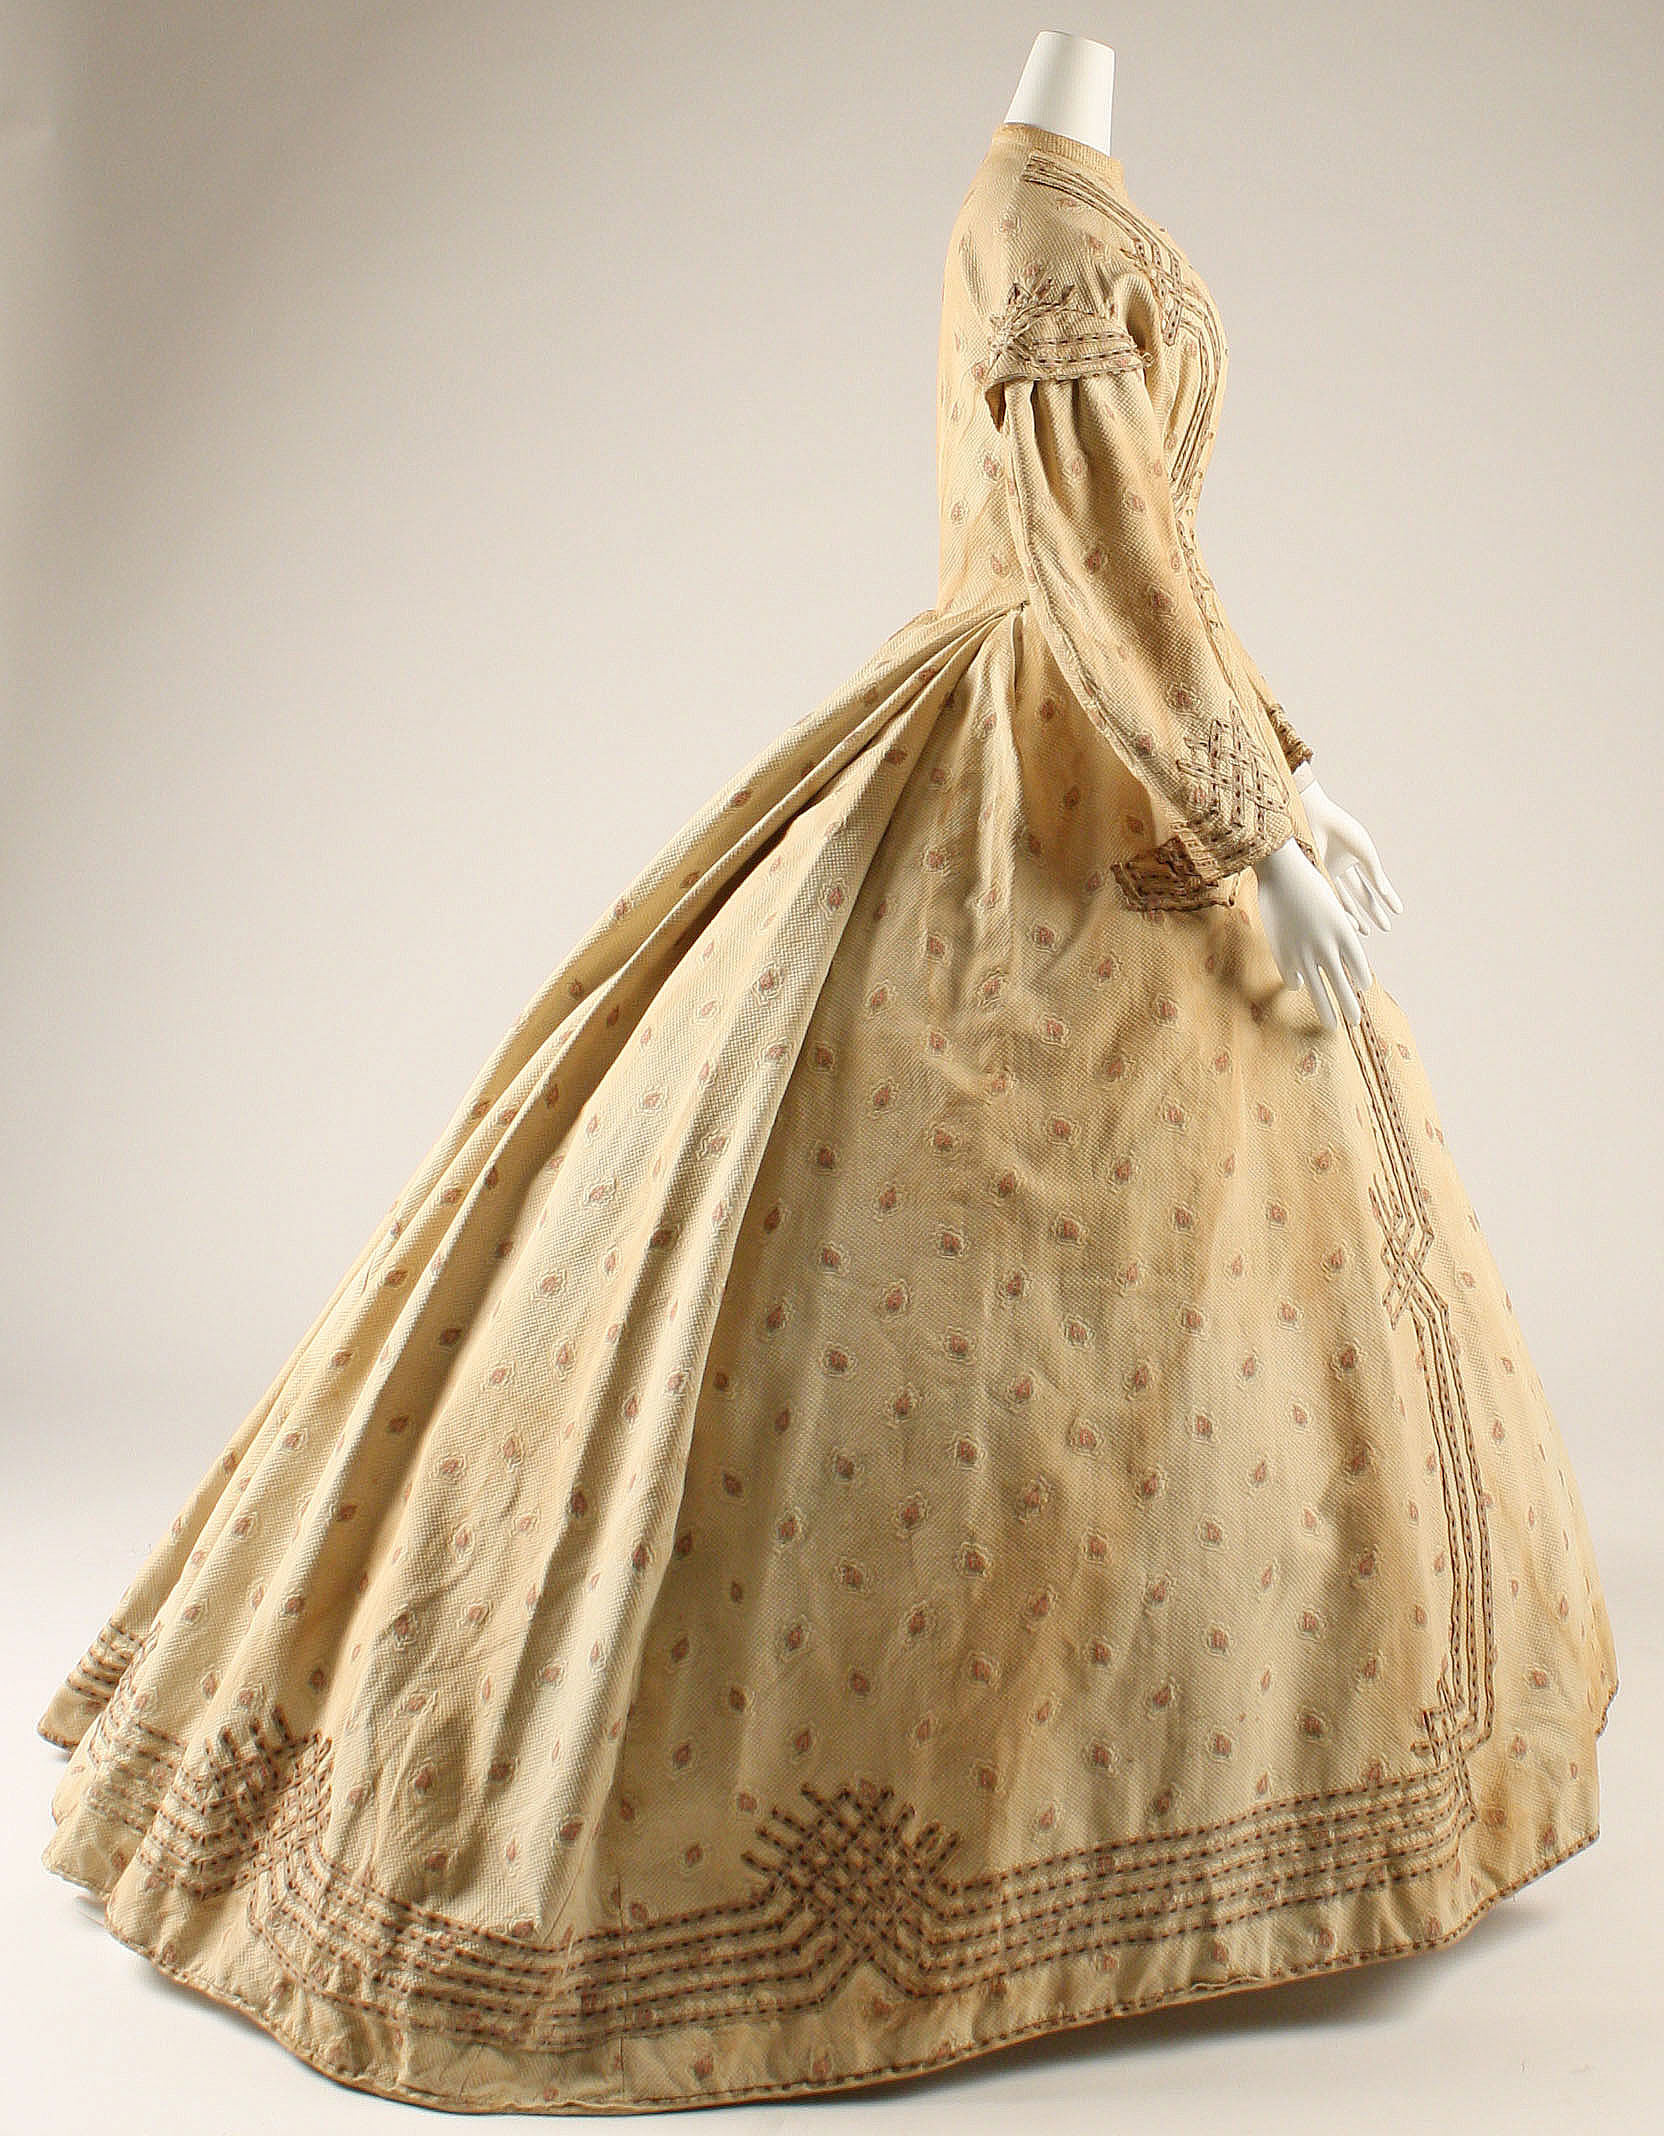 Dressing gown | American | The Metropolitan Museum of Art